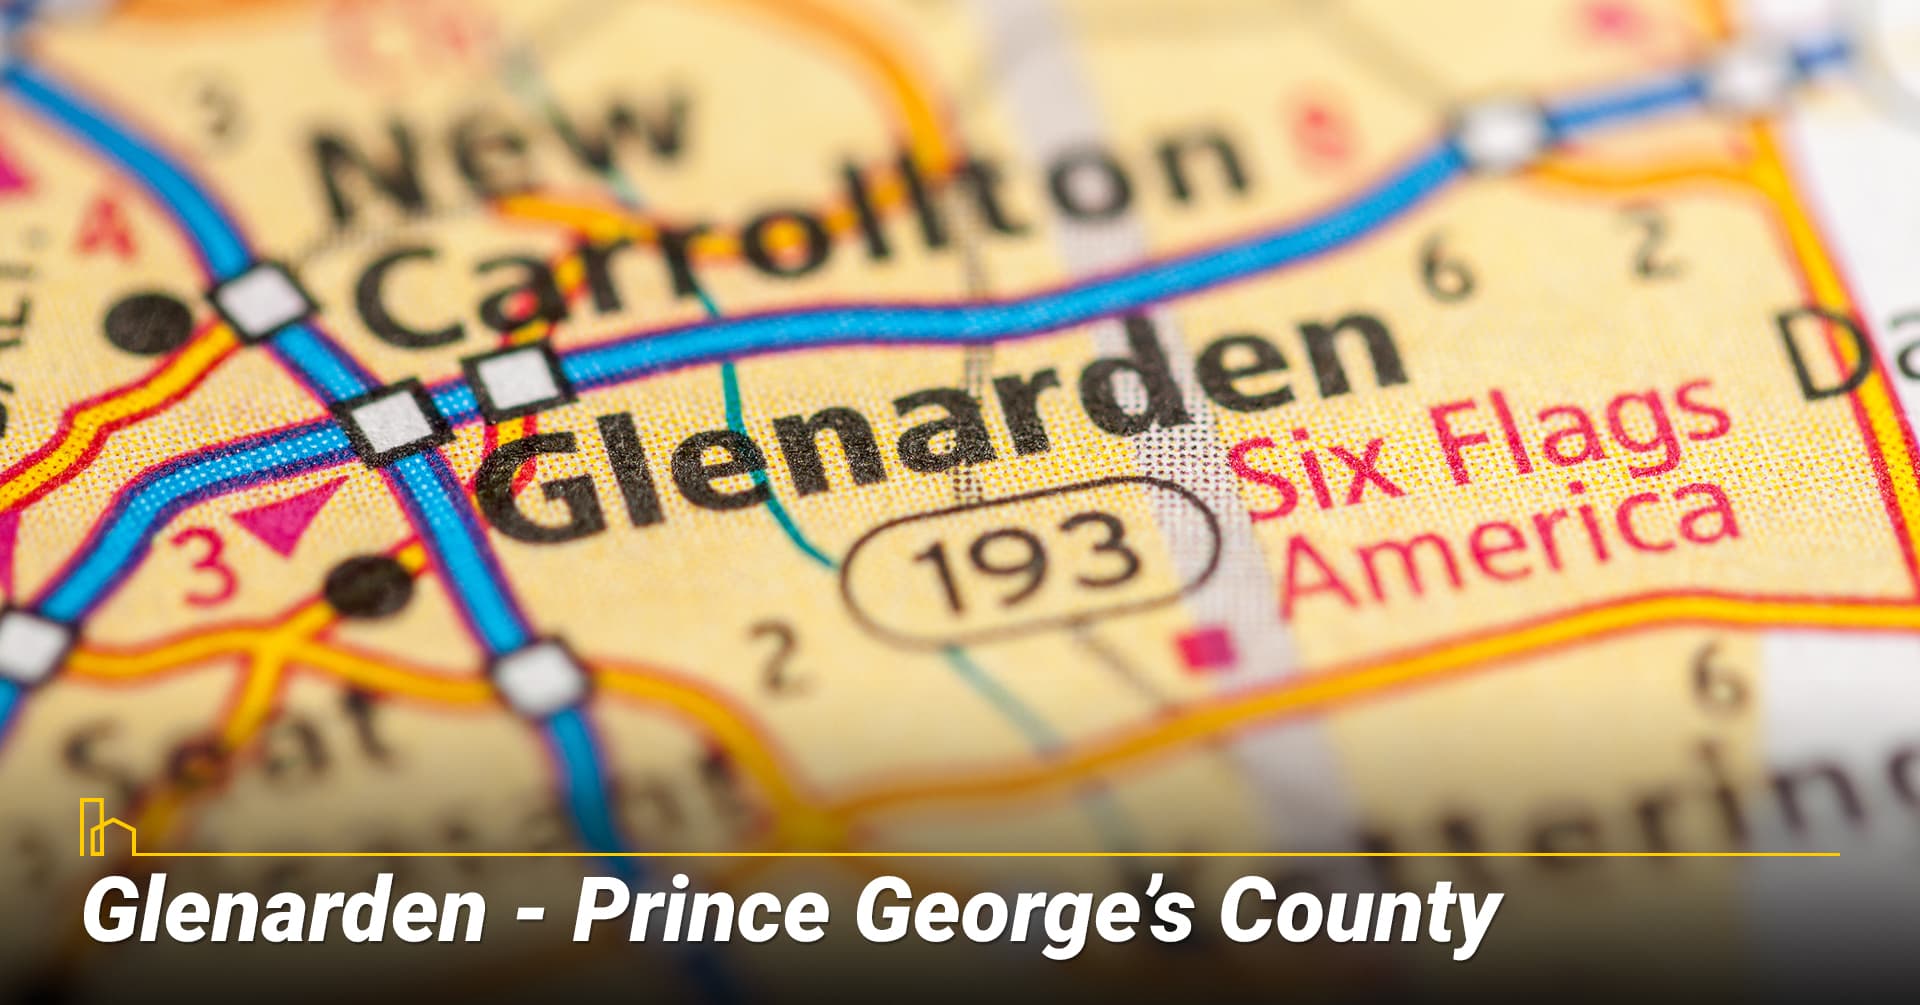 Glenarden - Prince George’s County